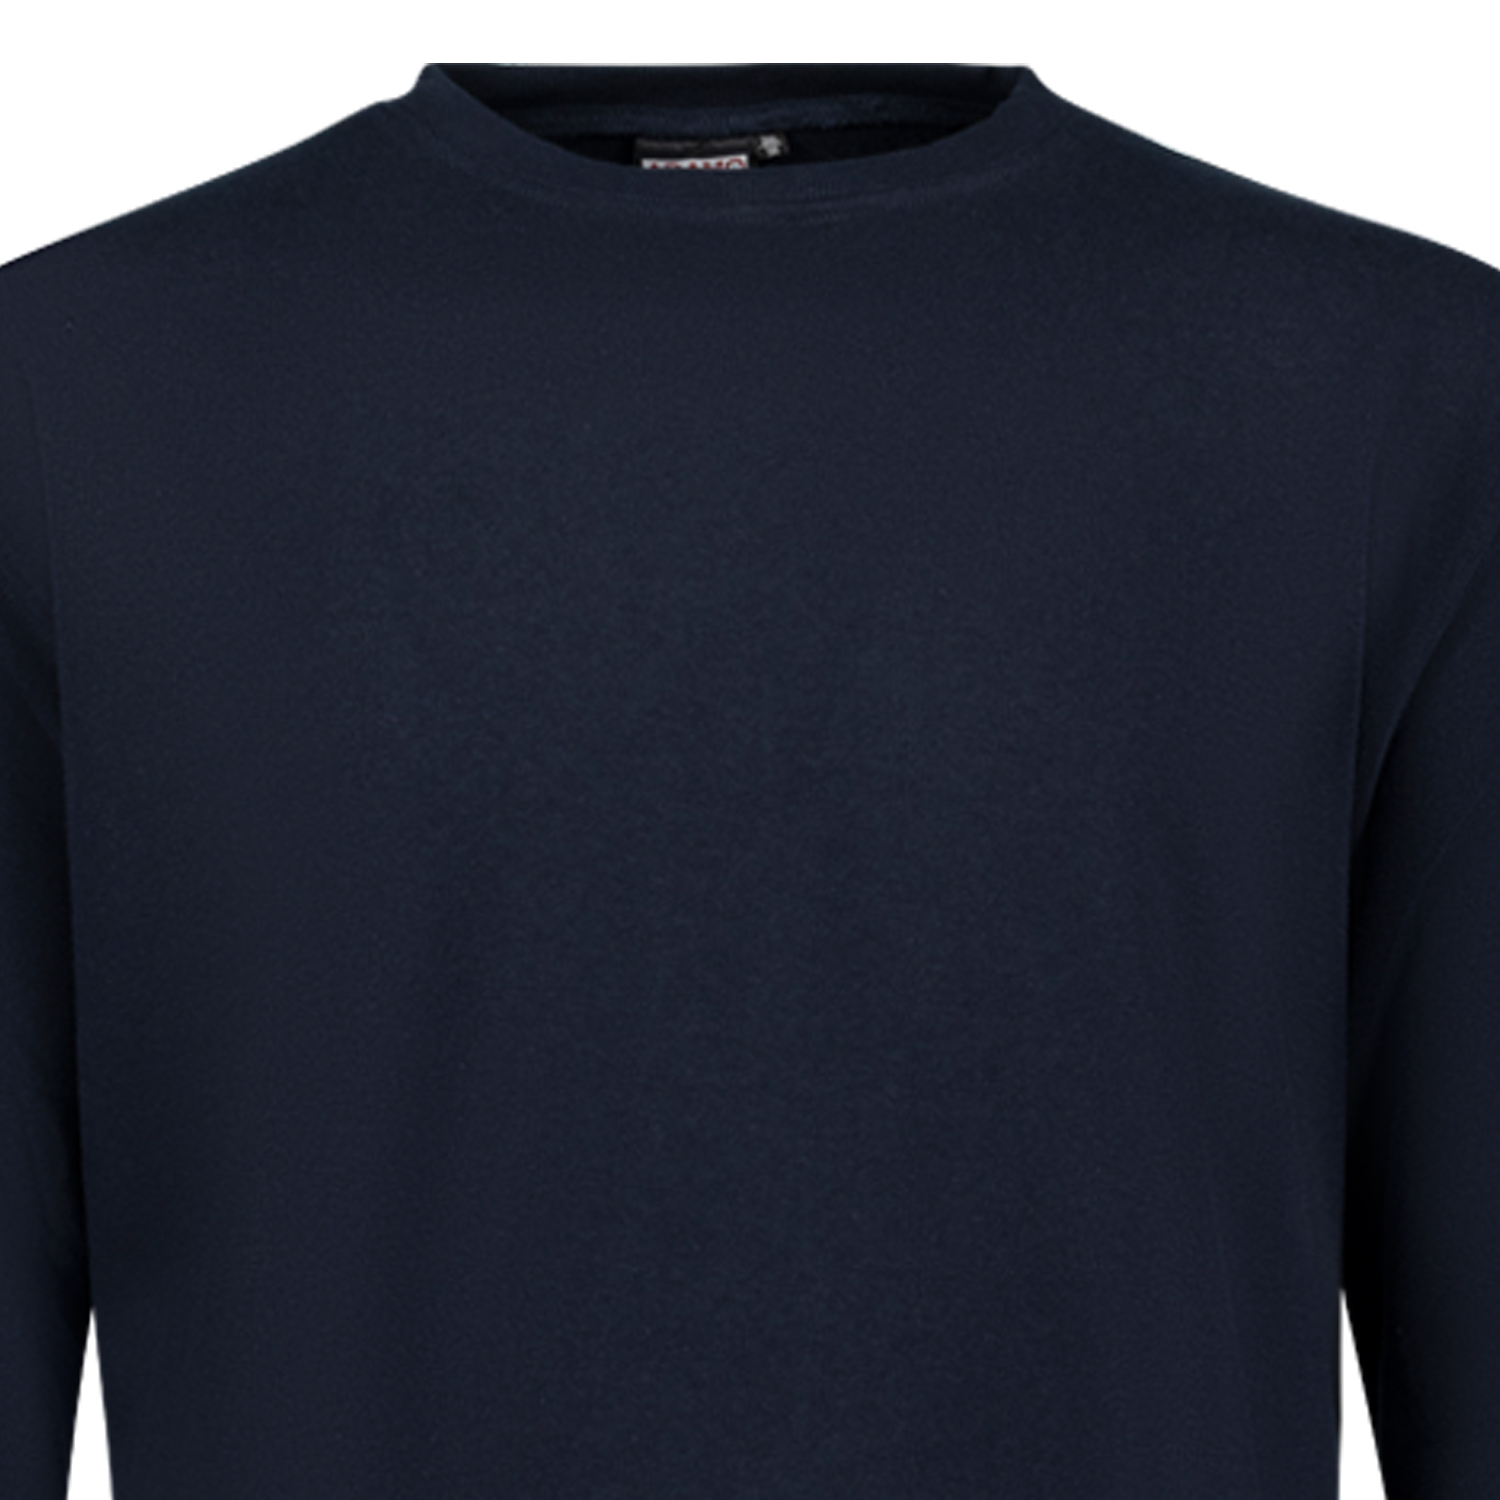 Sweatshirt ATHEN by ADAMO in navy for men up to oversize 14XL